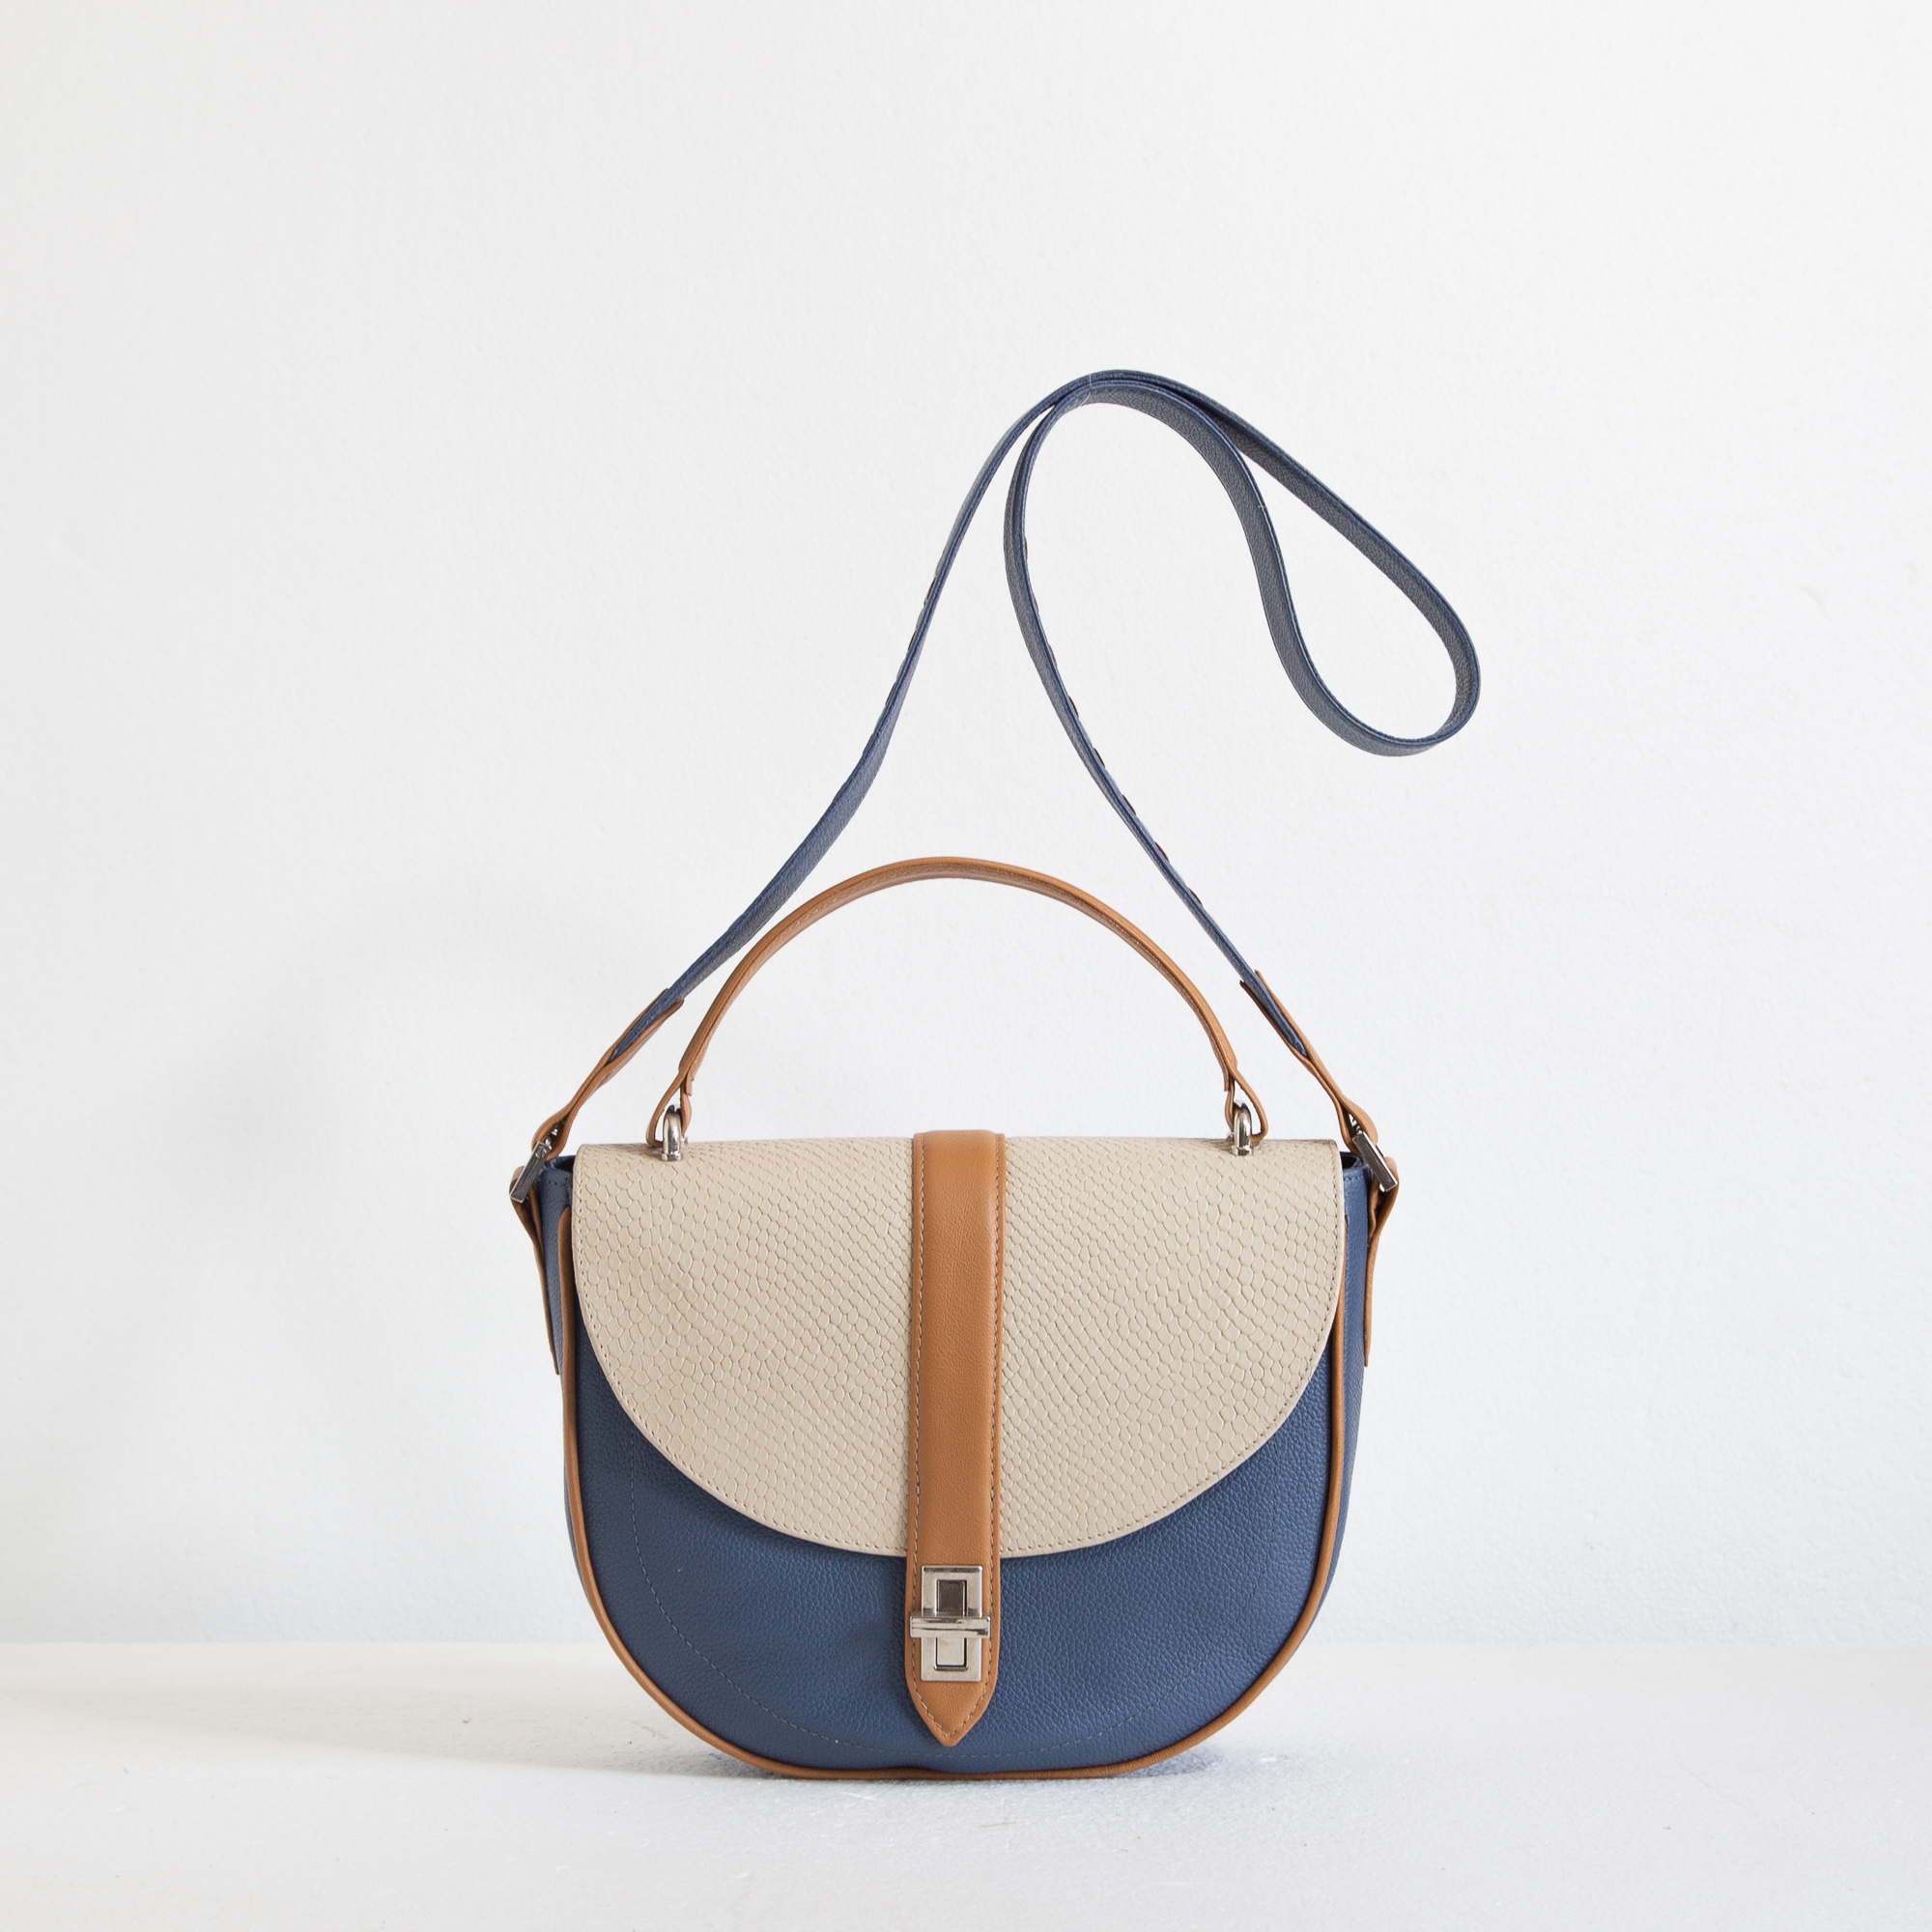 Leather half moon shaped handbag with top handle